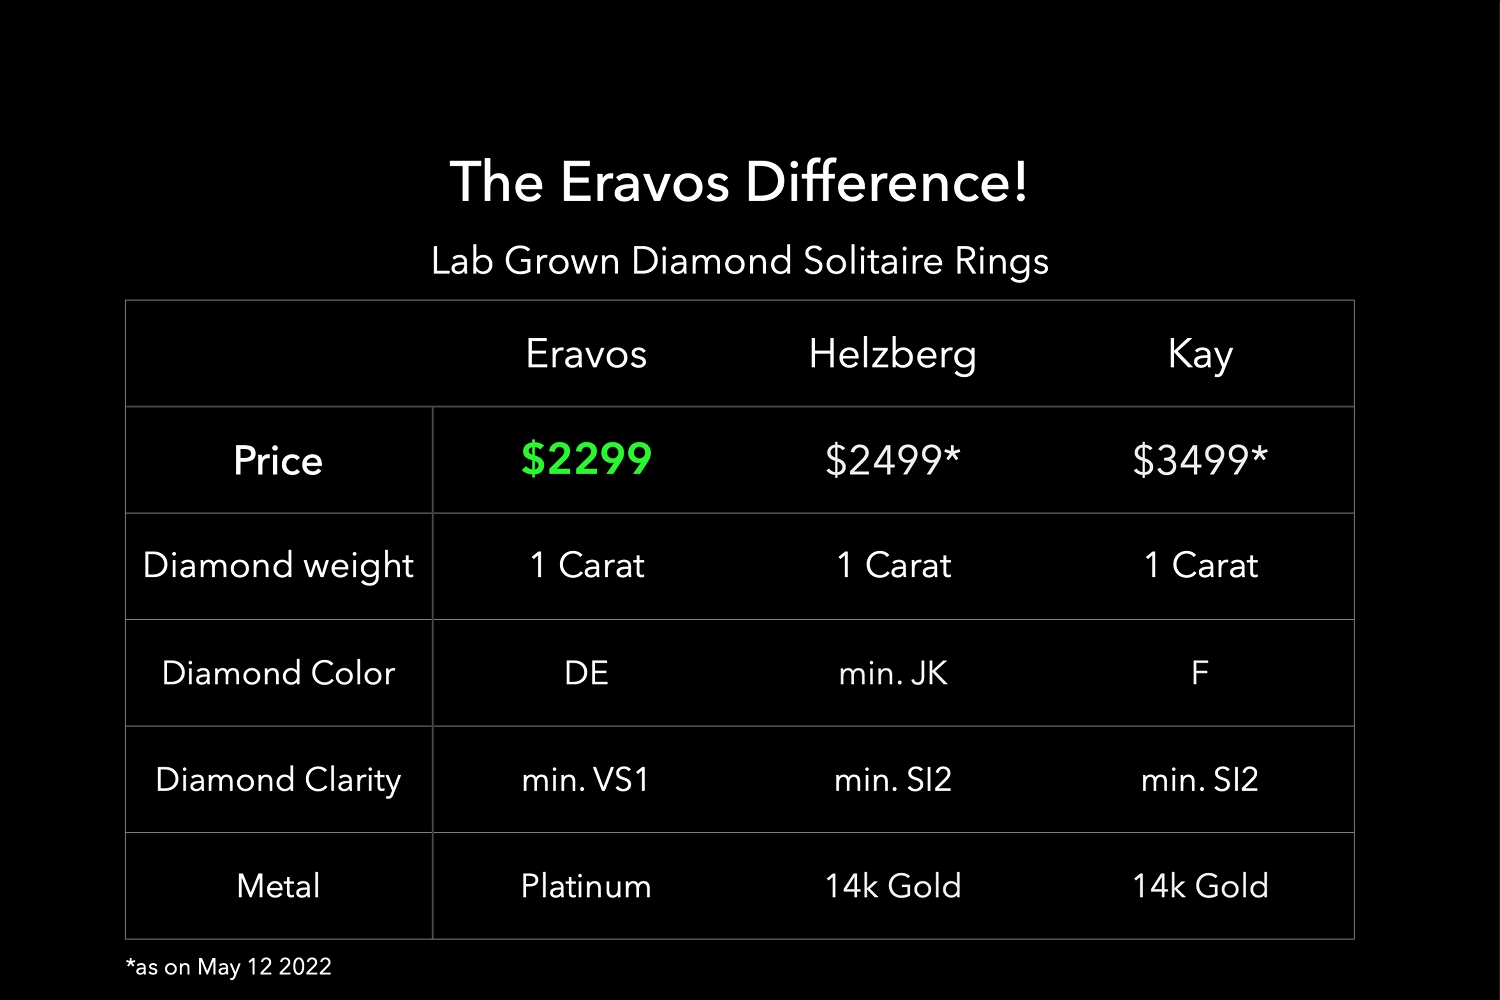 Eravos lab grown diamond solitaire 1 carat ring price comparison with competitiors